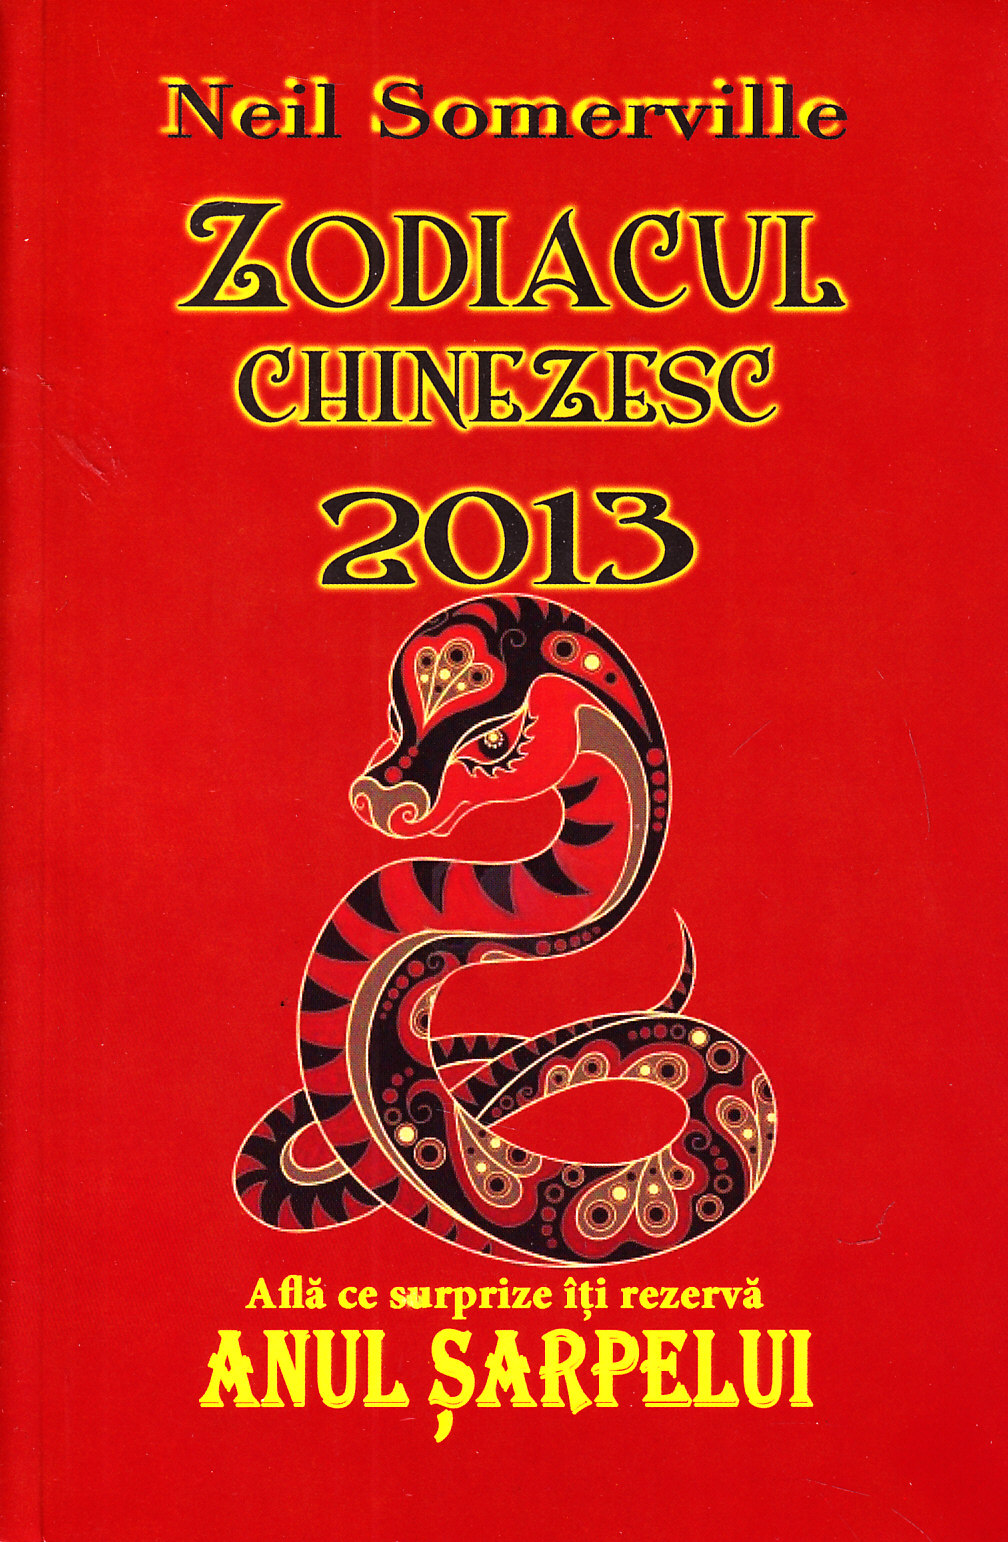 Zodiacul Chinezesc 2013 - Neil Somerville